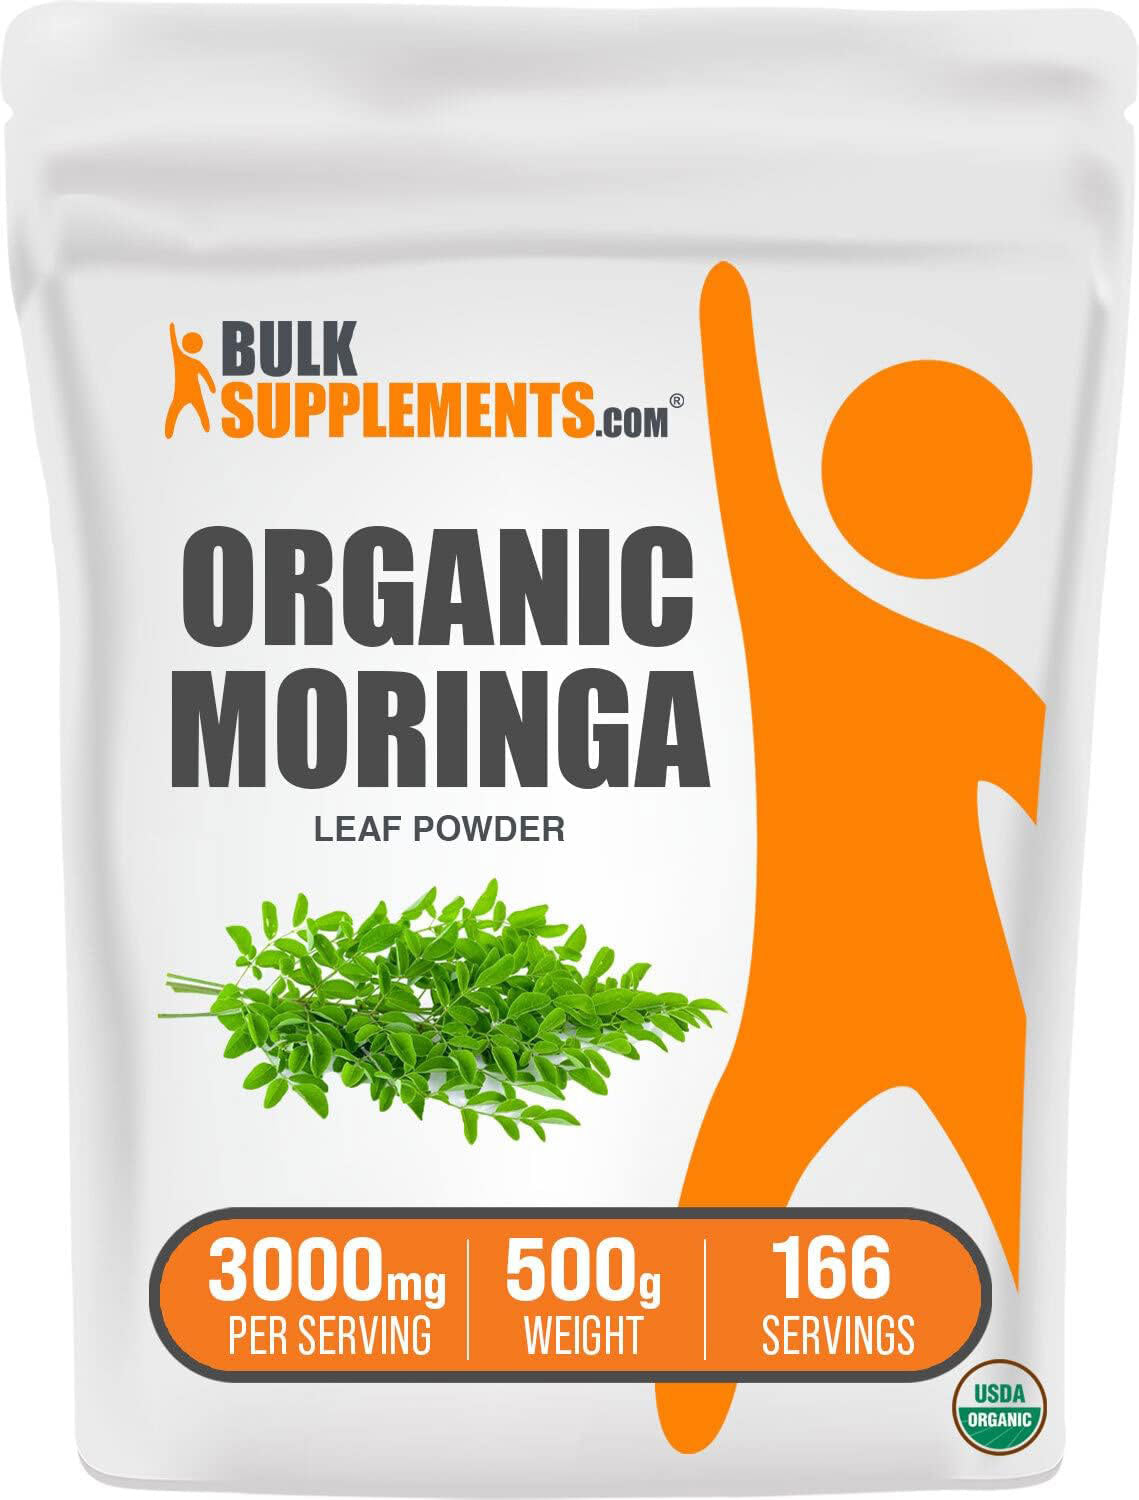 BulkSupplements.com Organic Moringa Leaf Powder 500g Bag